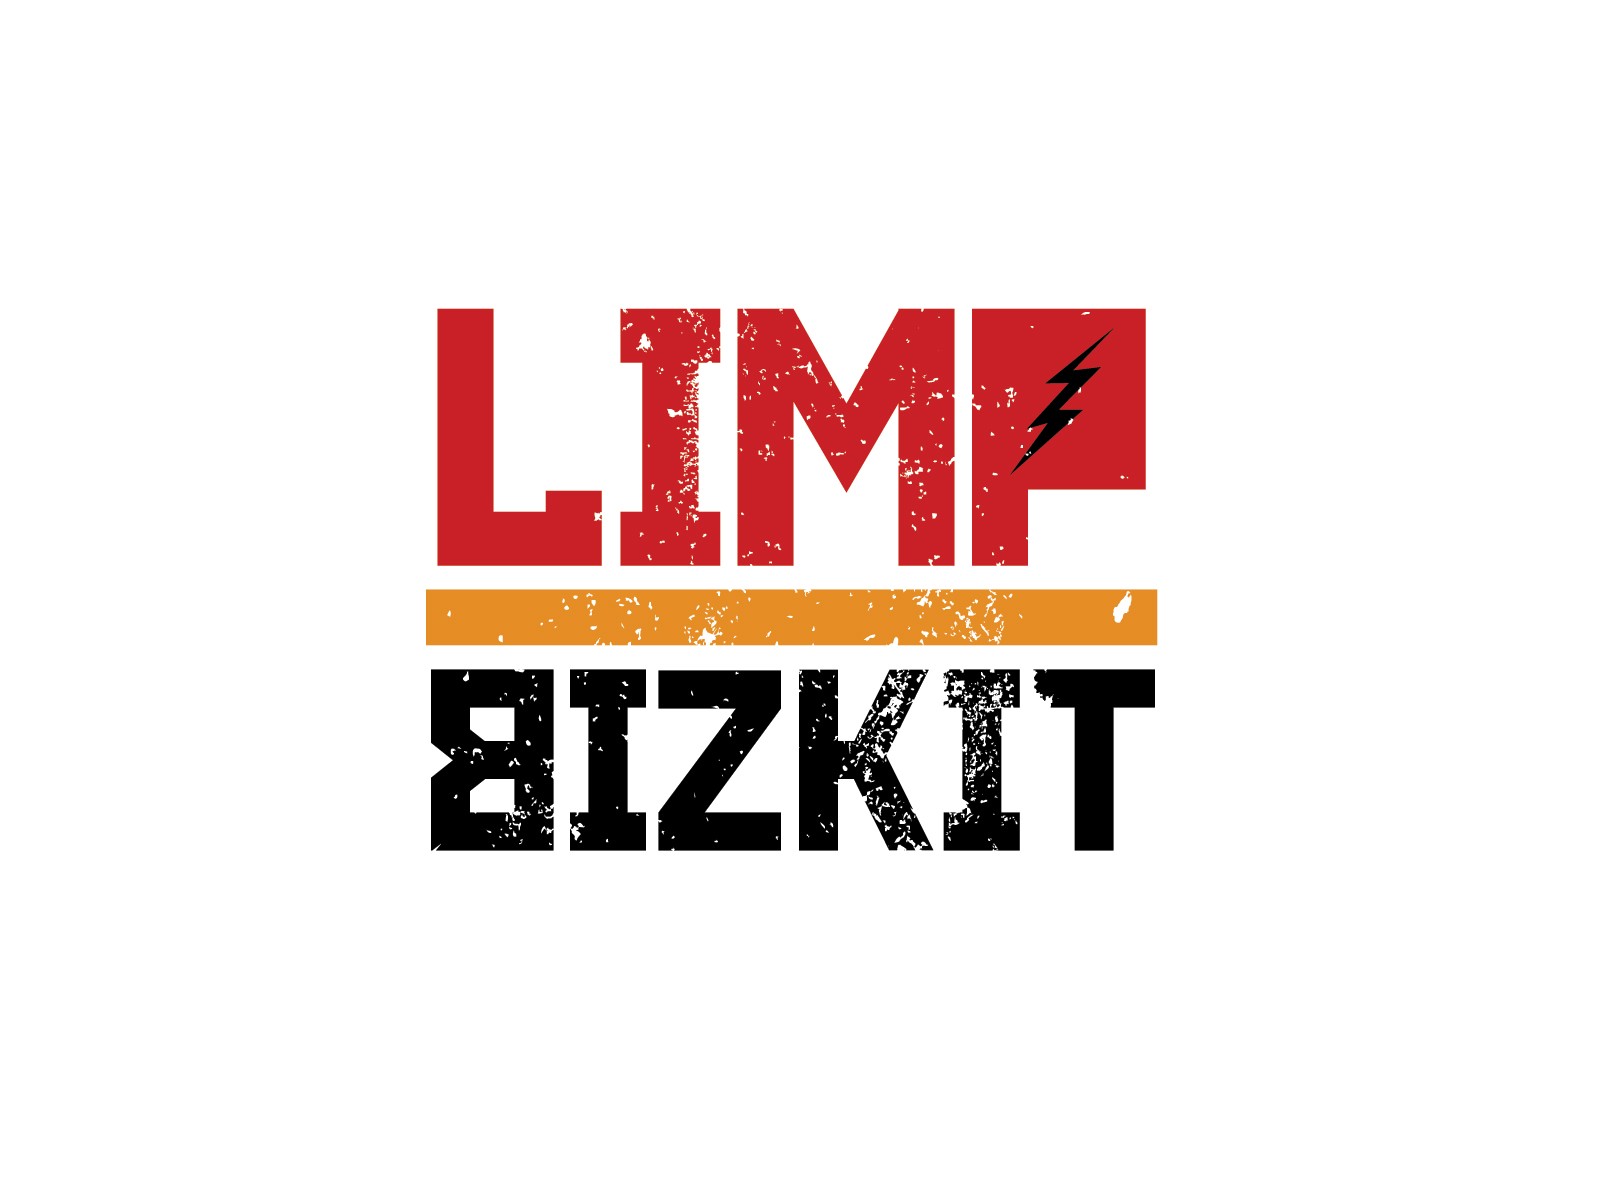 General 1600x1200 logo music Limp Bizkit white background band